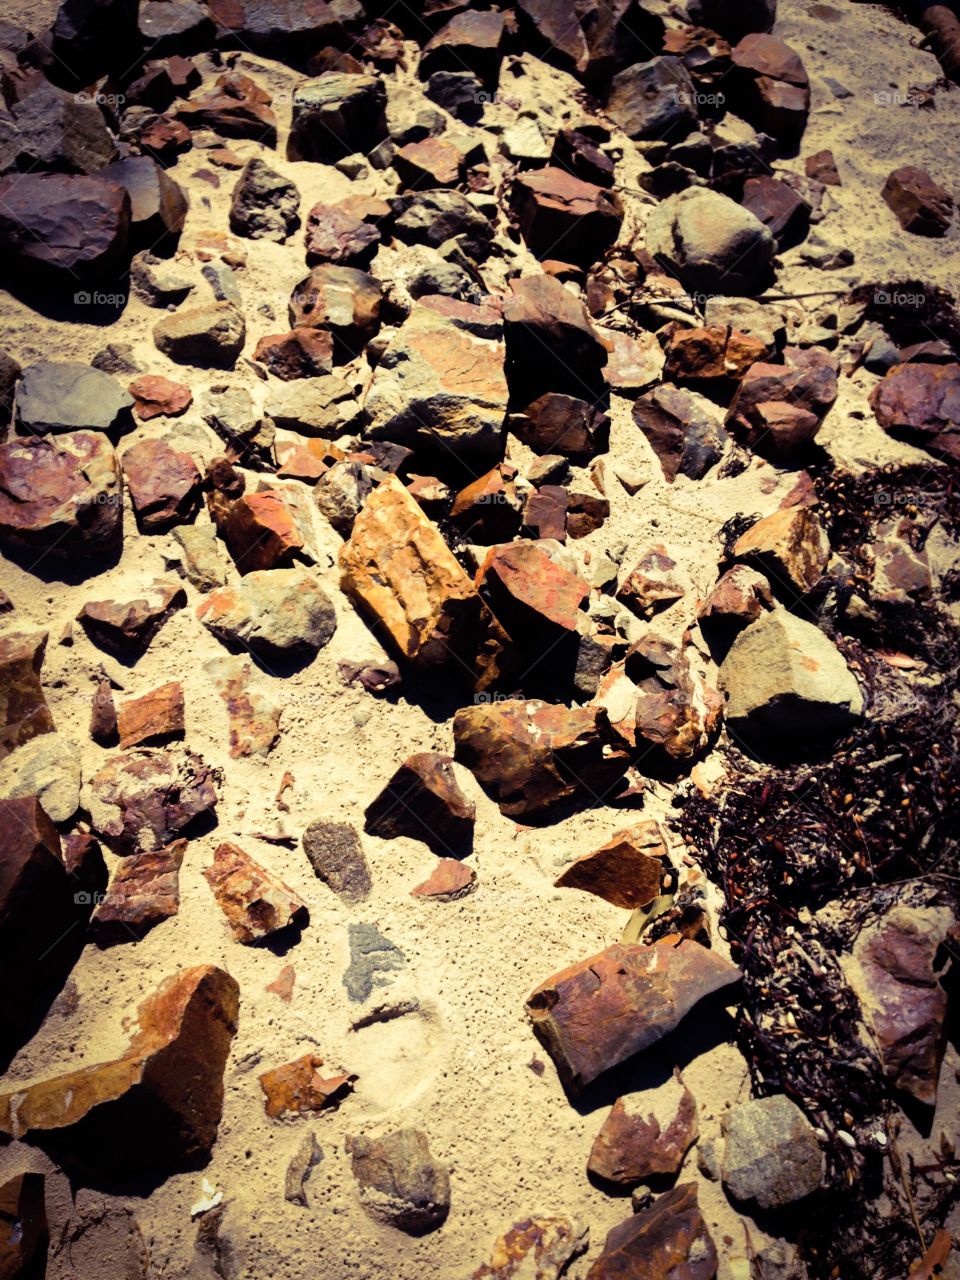 Rocks. Unsorted pebbles at a beach in Bruny Island, Tasmania